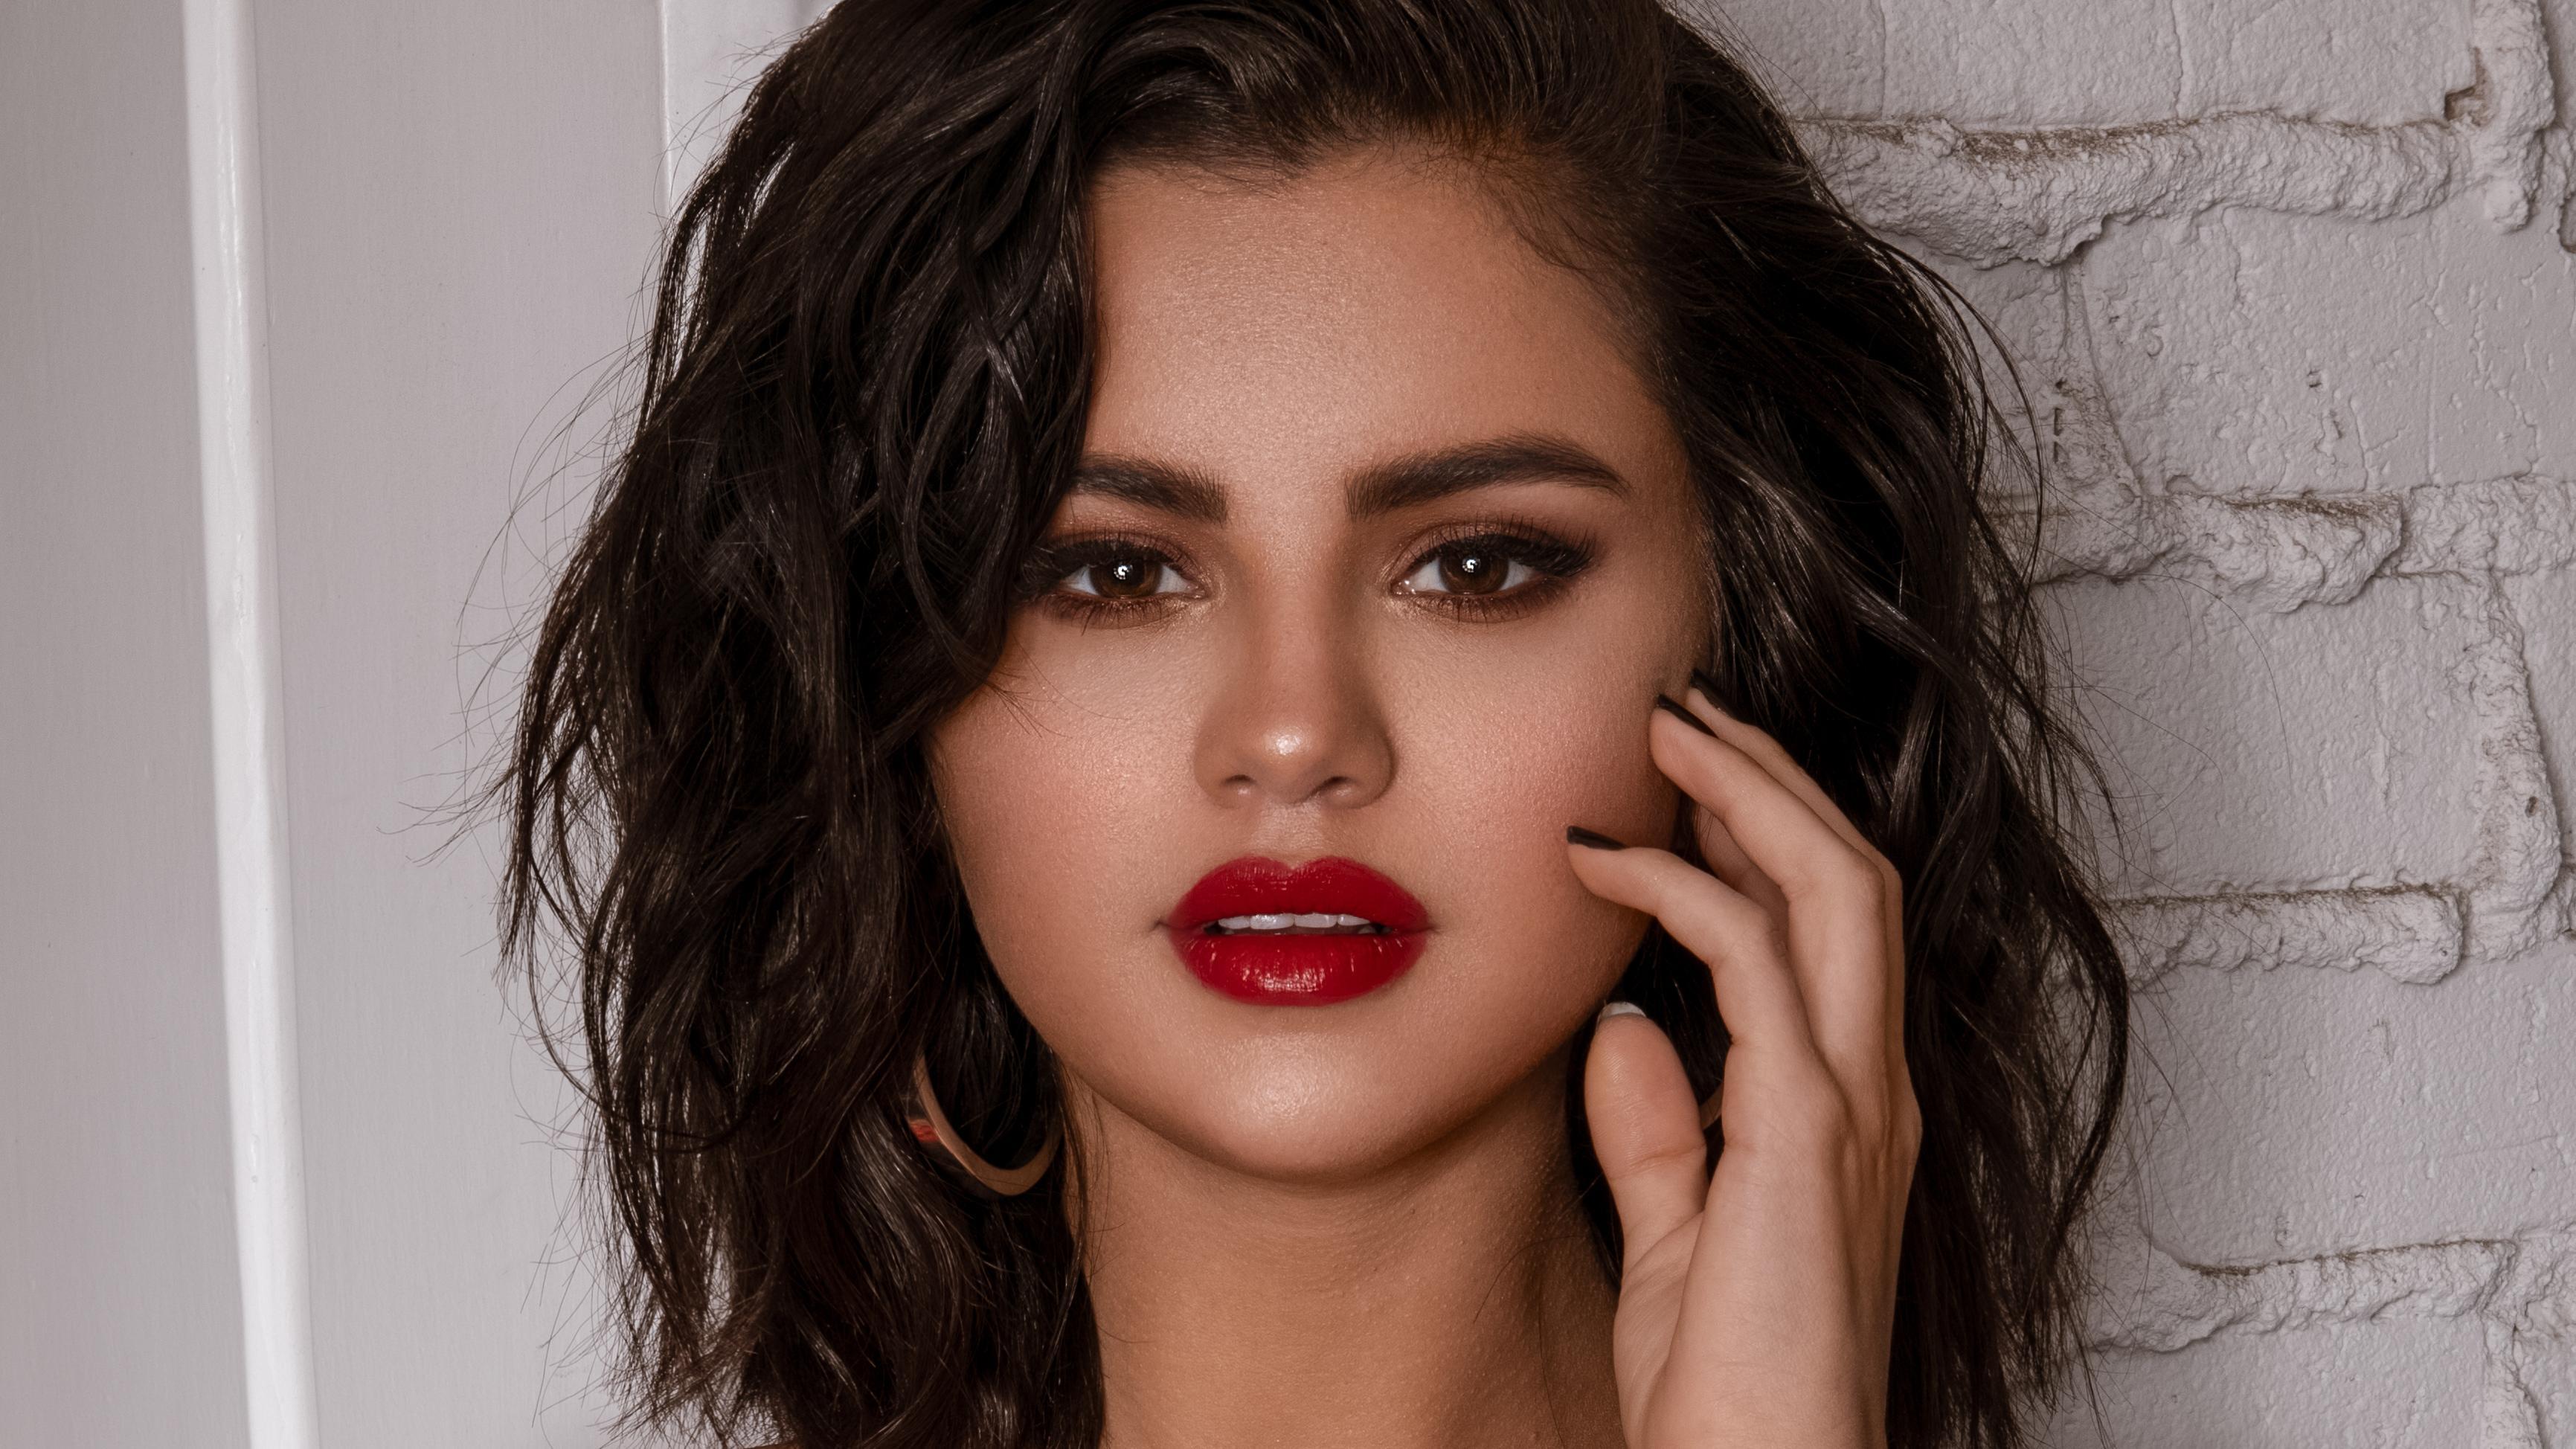 Selena Gomez 2019 Latest, HD Celebrities, 4k Wallpaper, Image